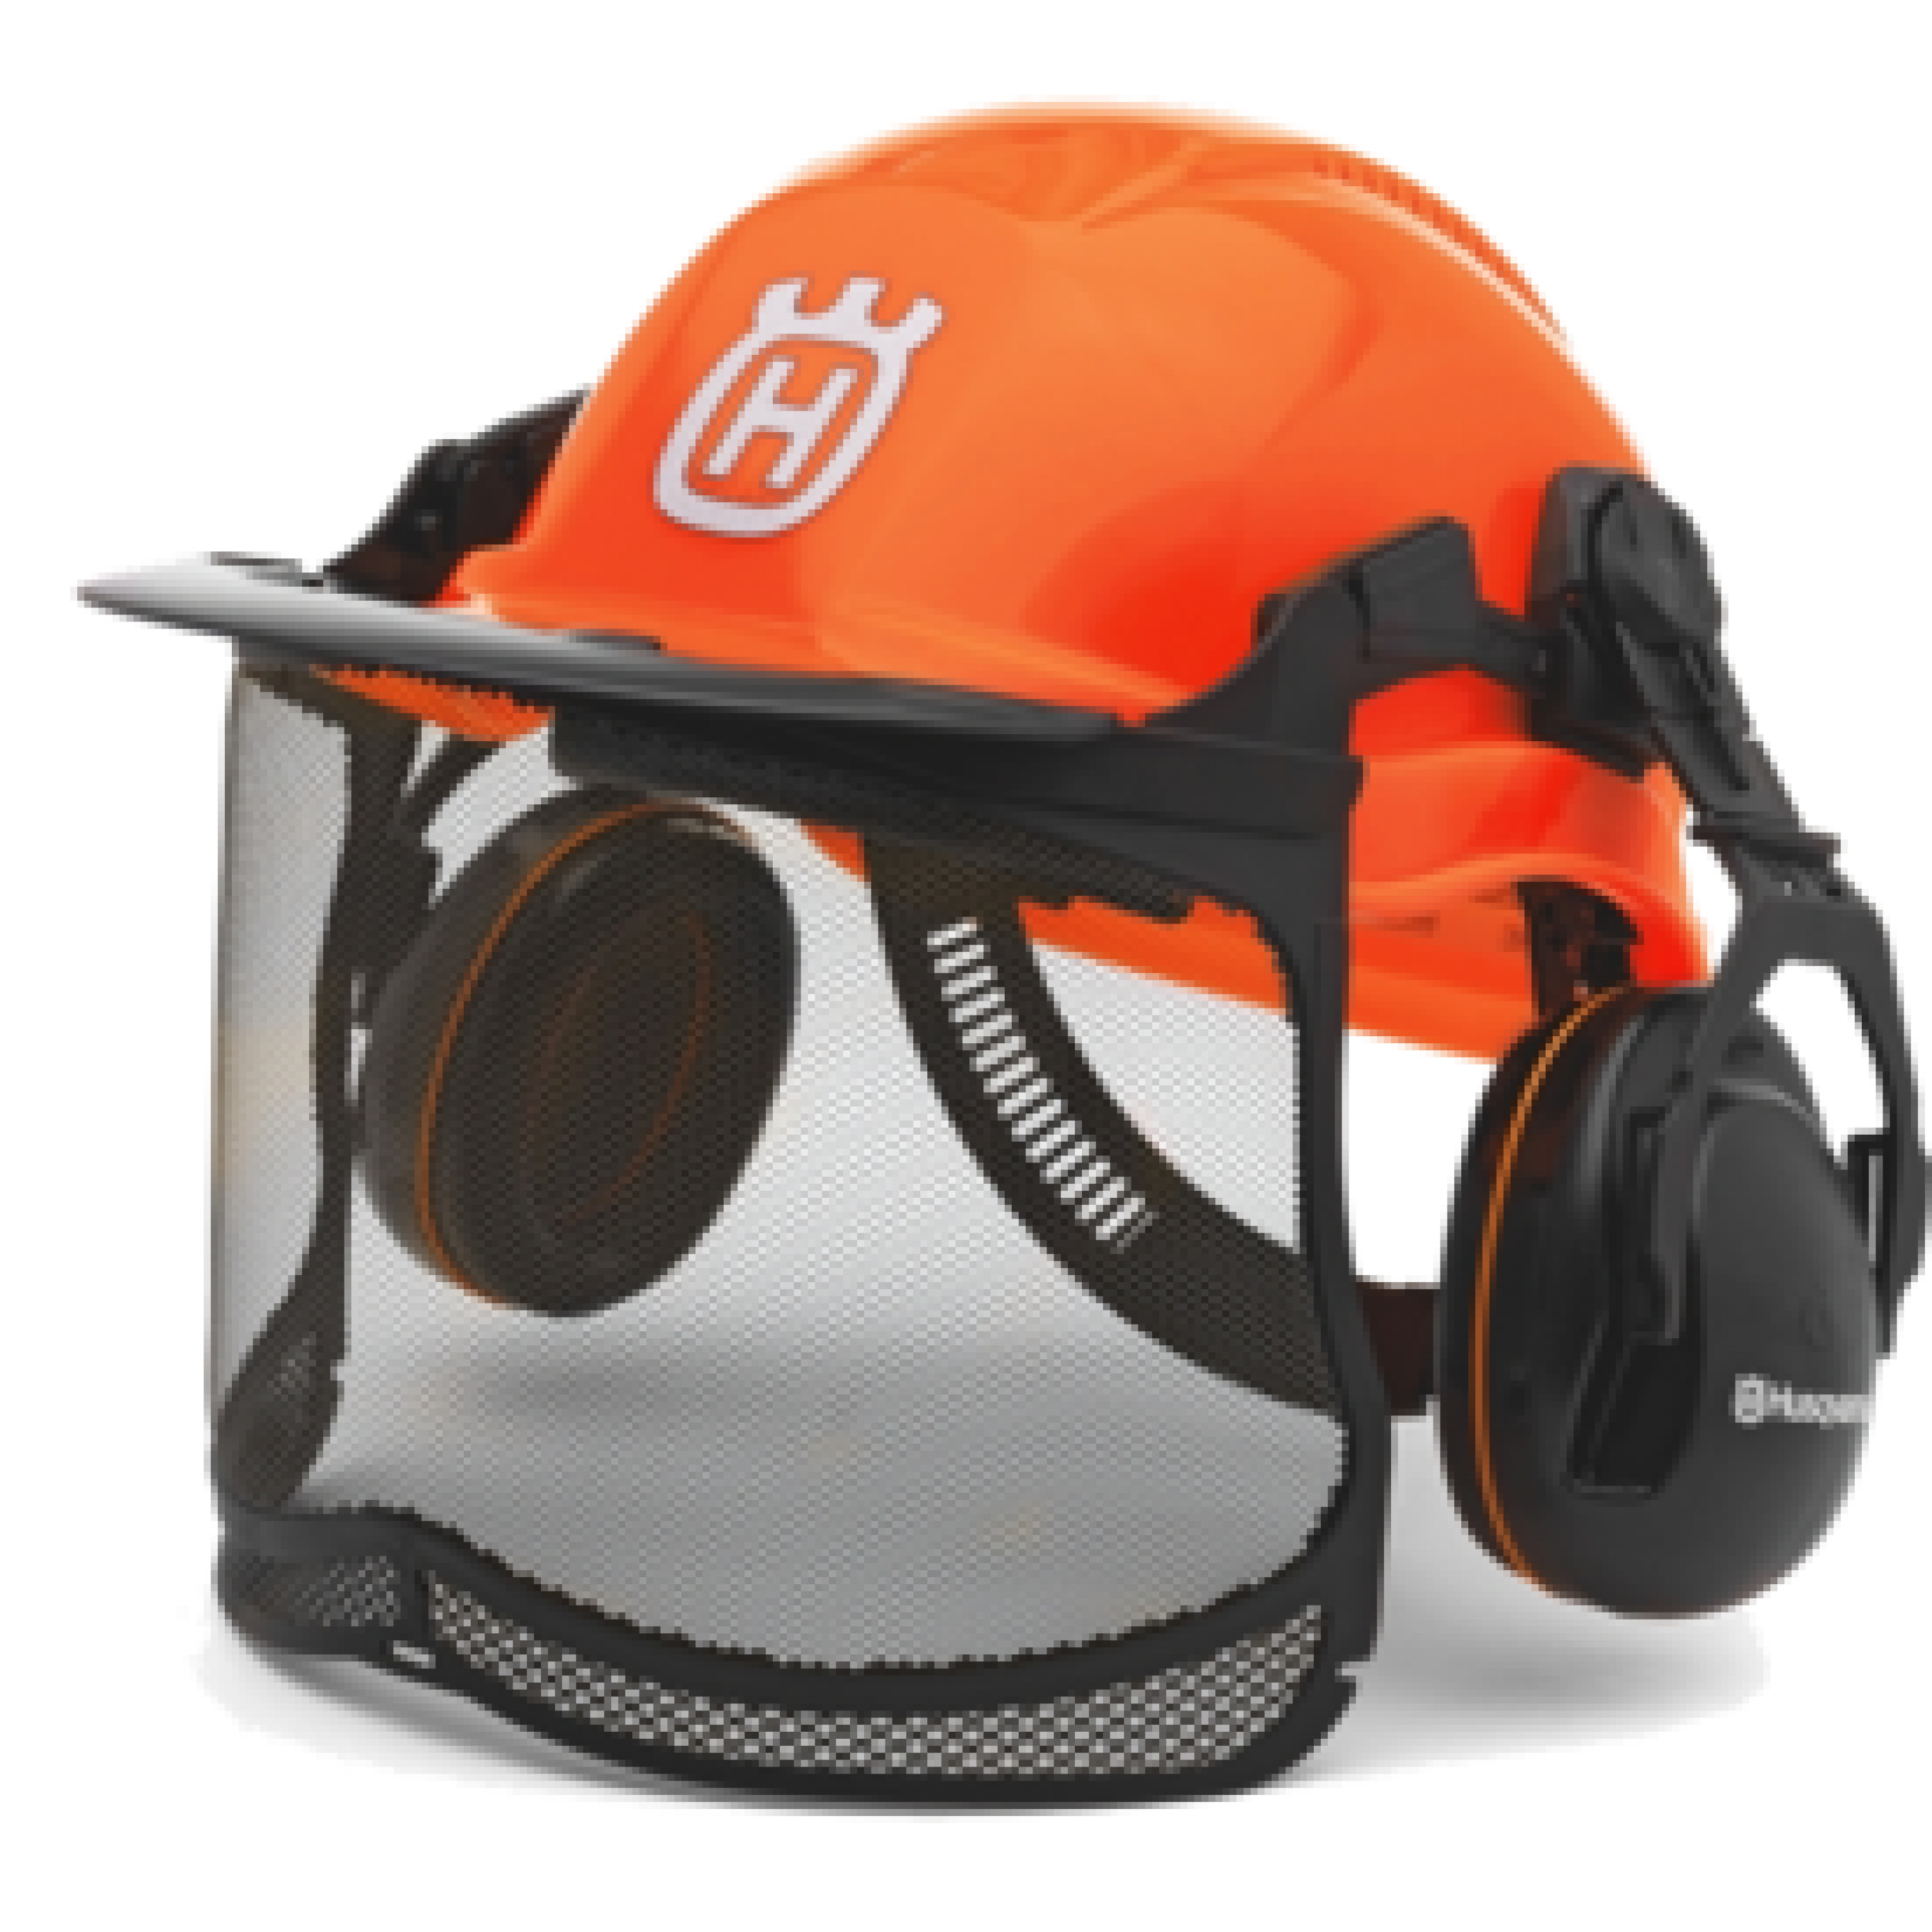 Шлем защитный Functional